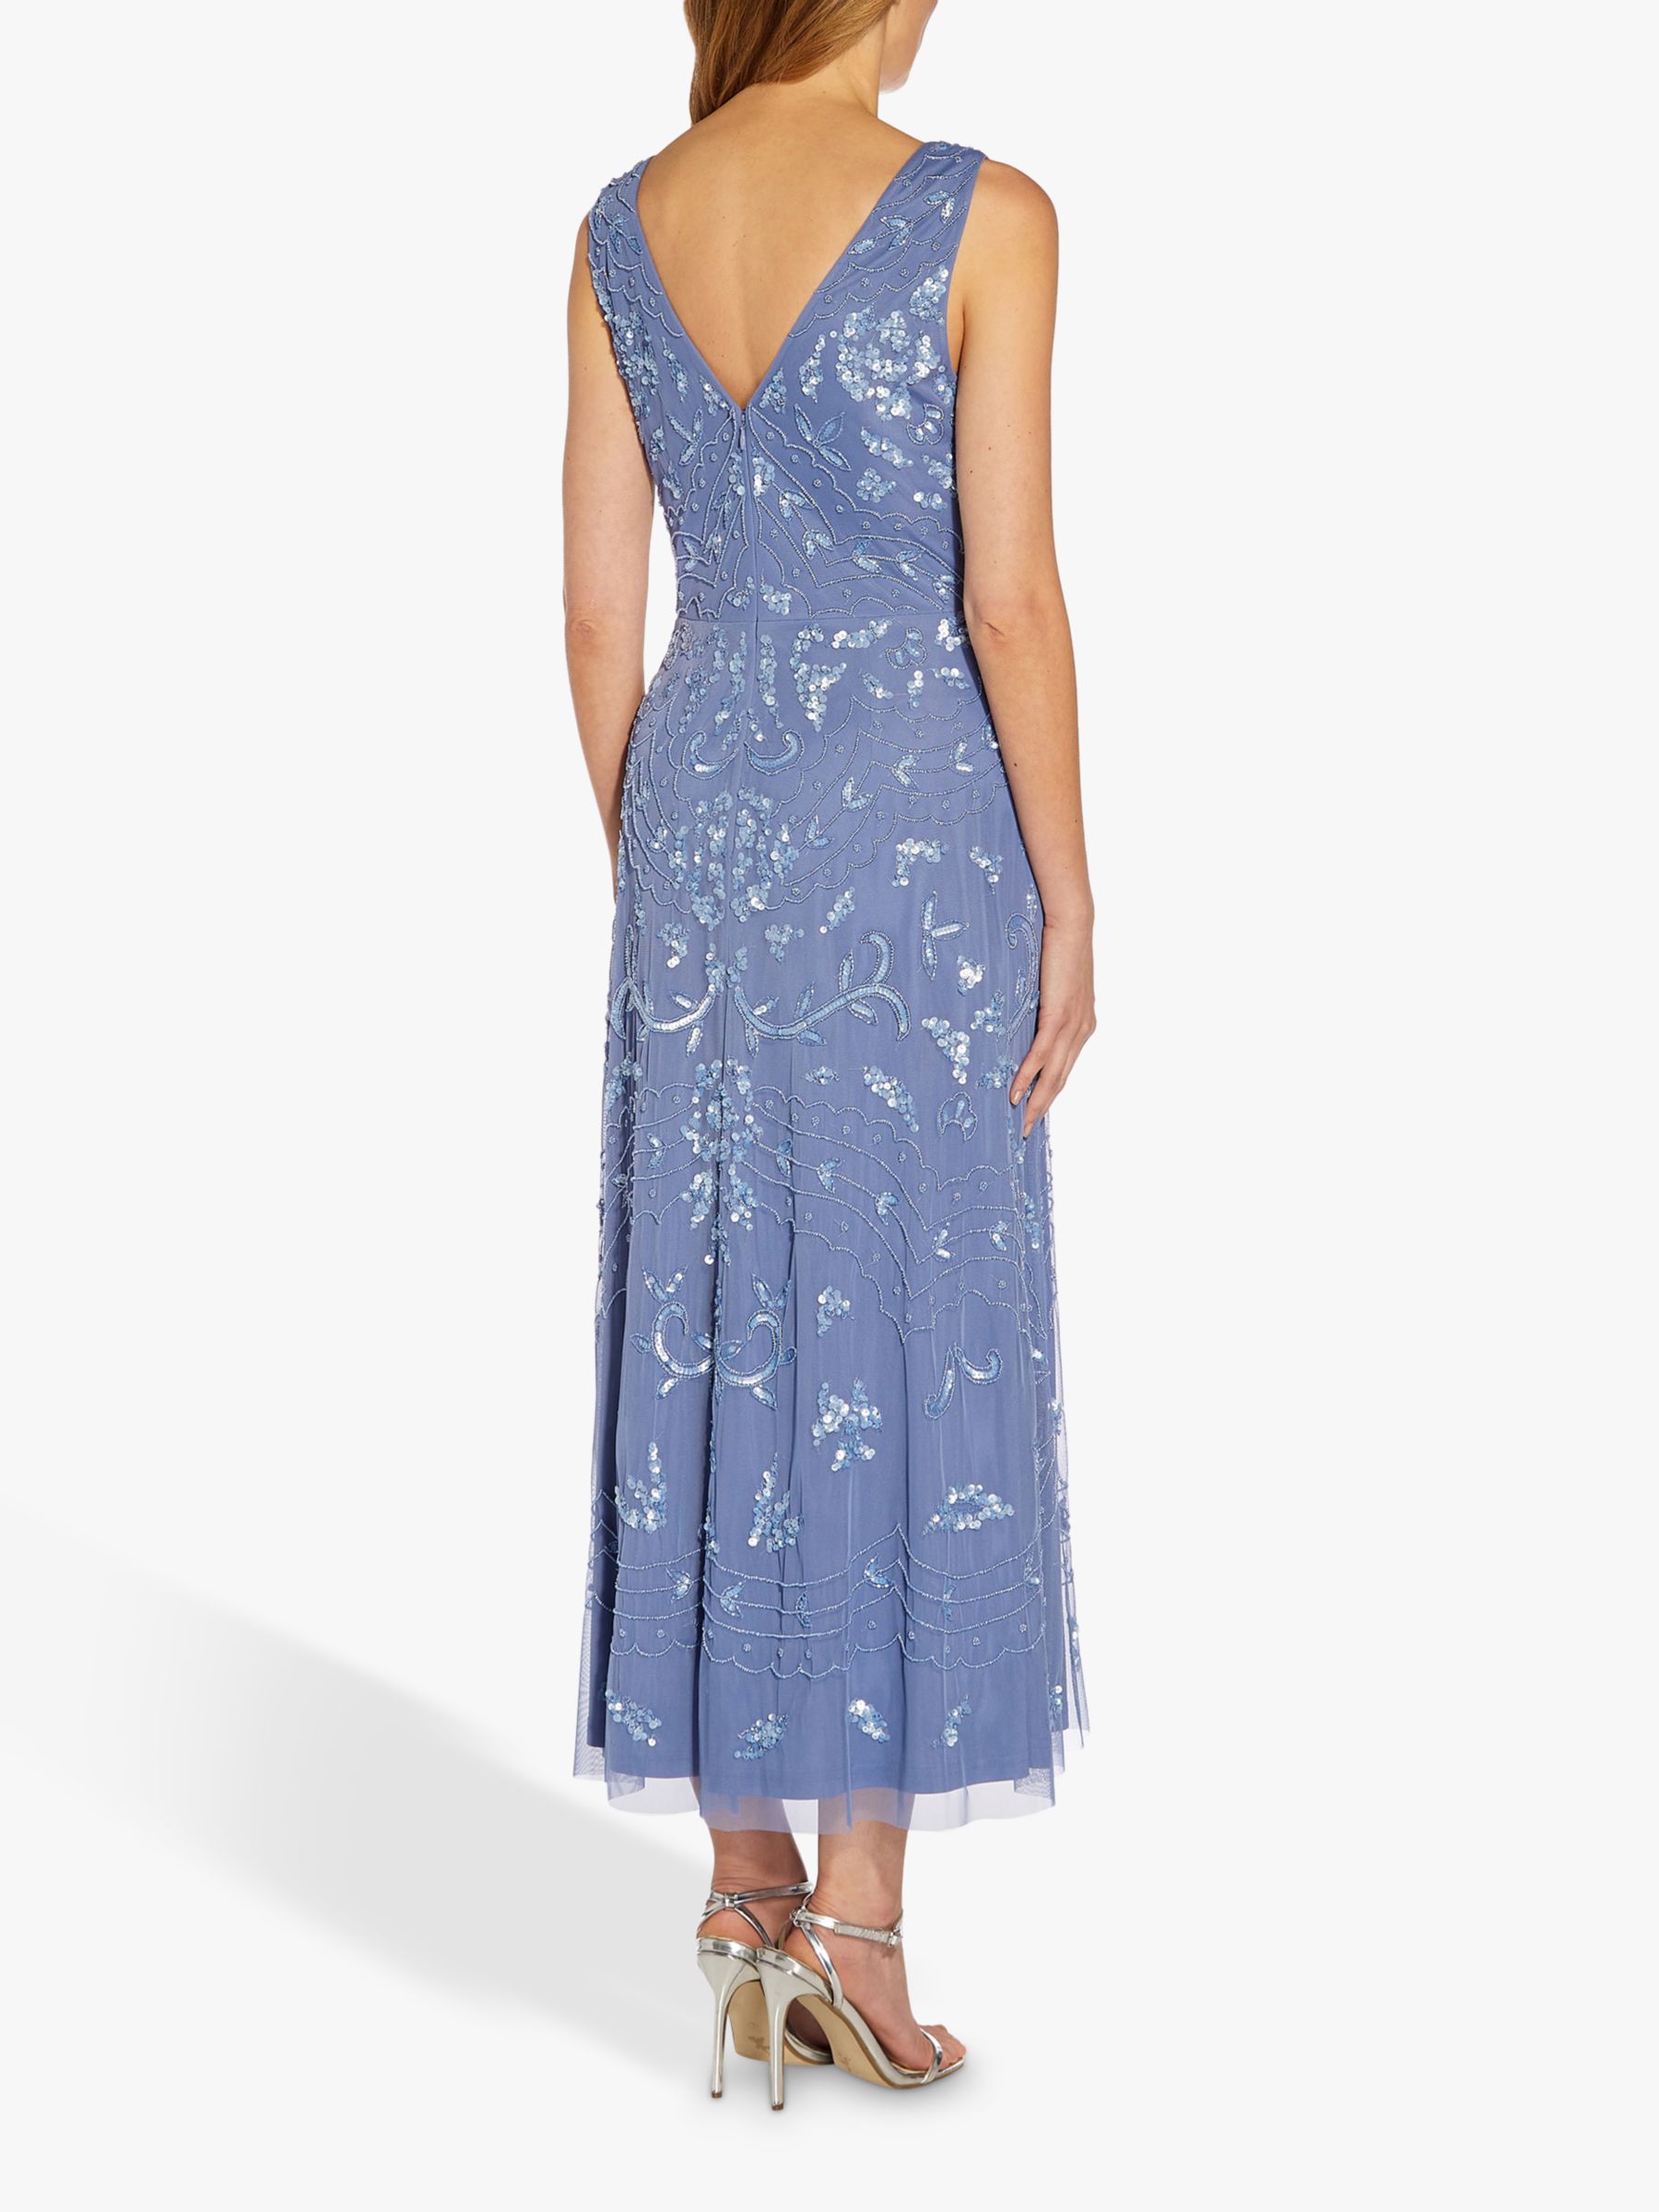 Adrianna Papell Beaded Maxi Dress, French Blue, 6